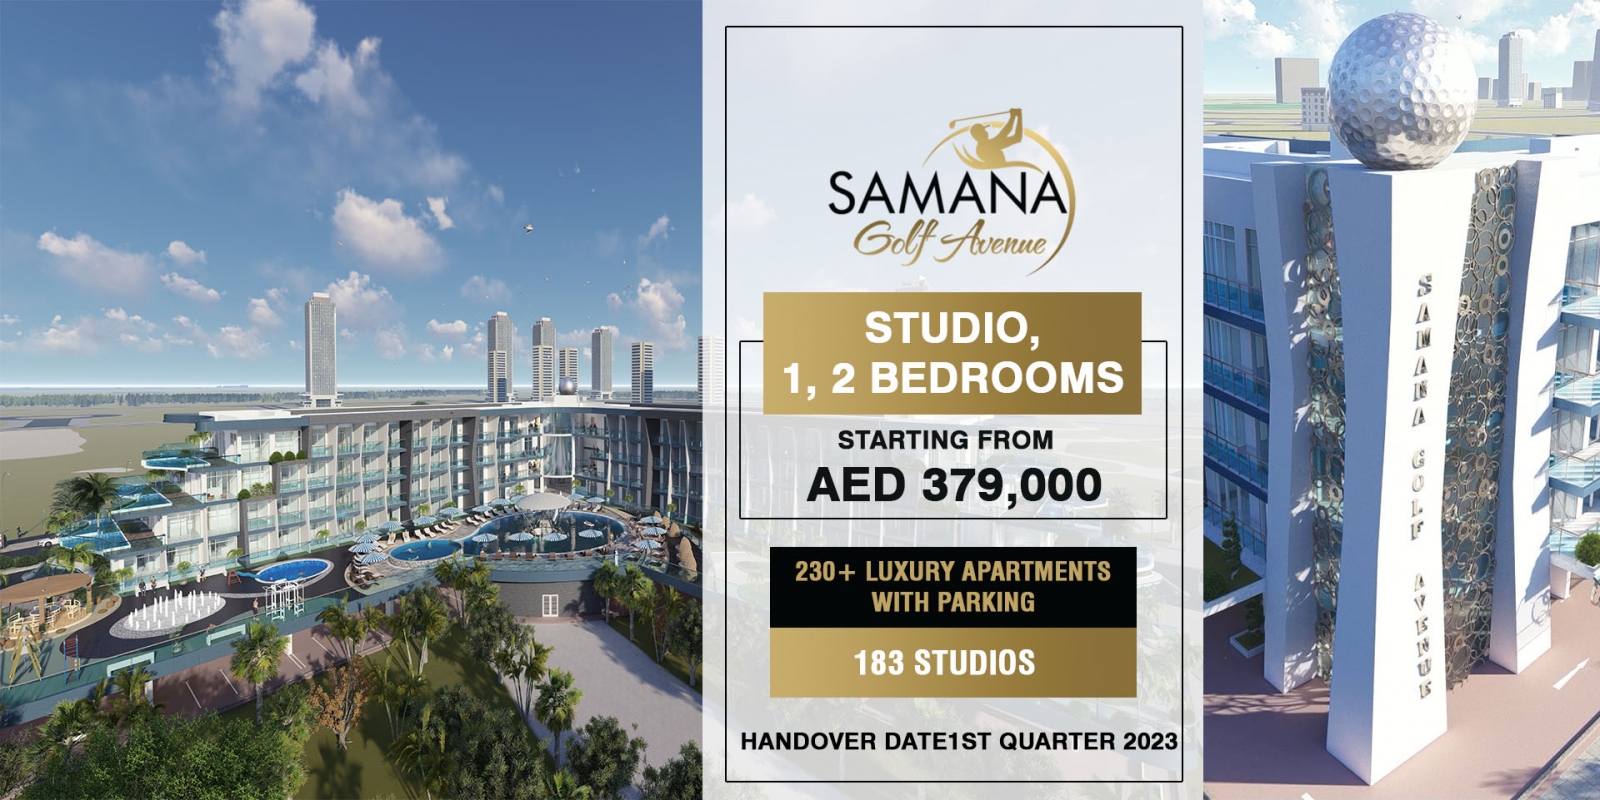 Samana Golf Avenue Dubai Studio city-Samana Golf Avenue banner.jpg